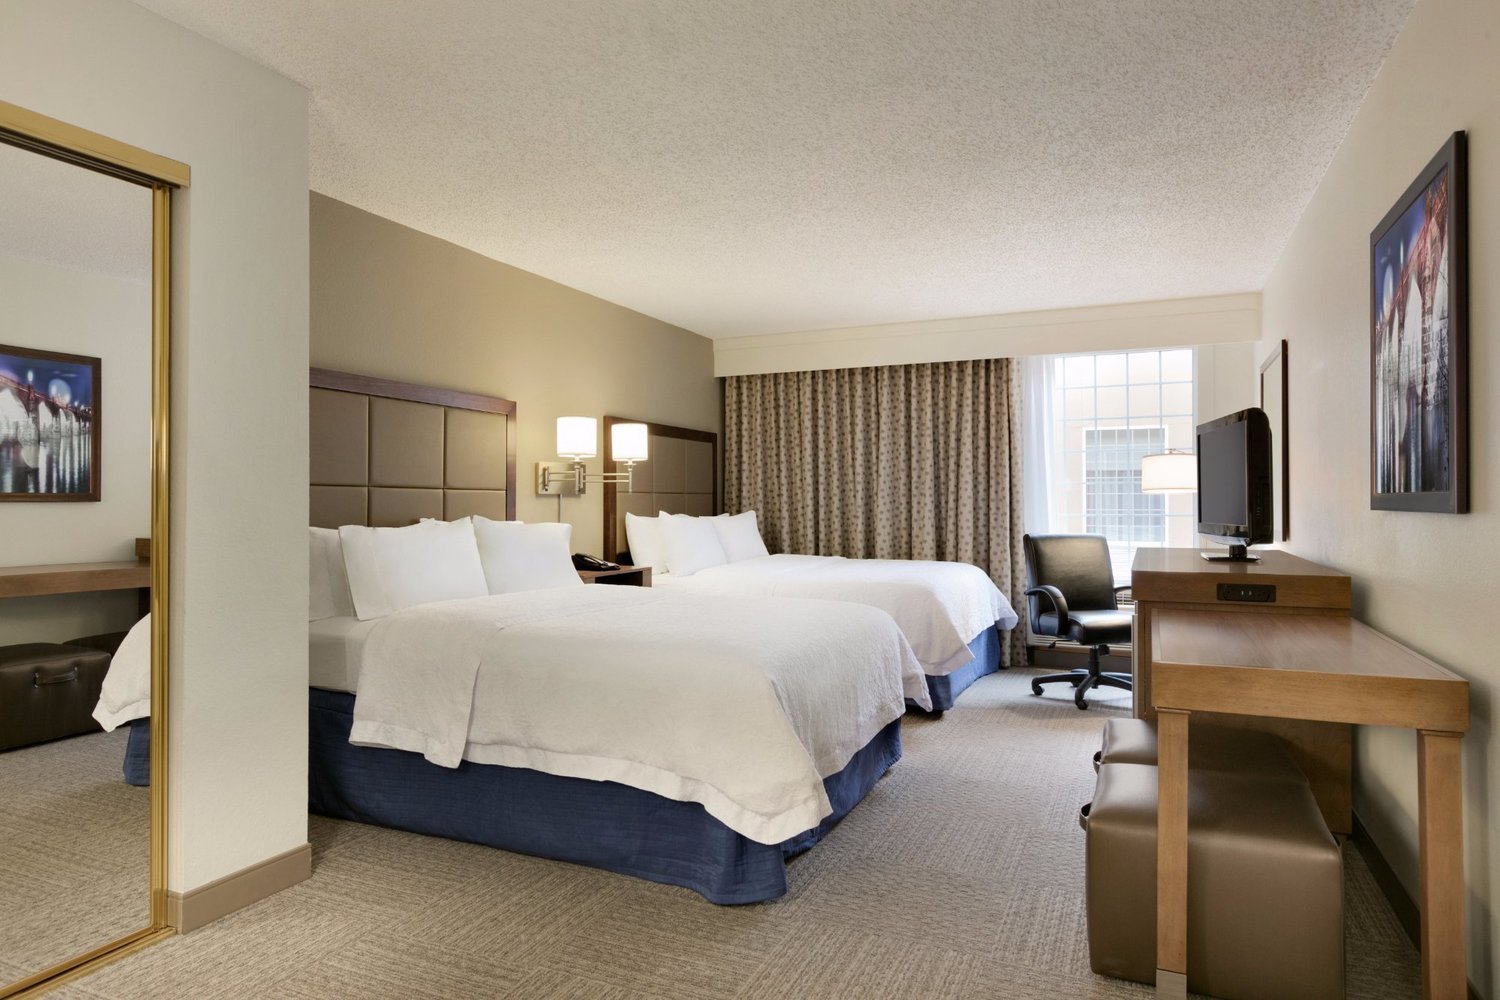 Hampton Inn Suites Hershey  Hershey  Jobs Hospitality Online